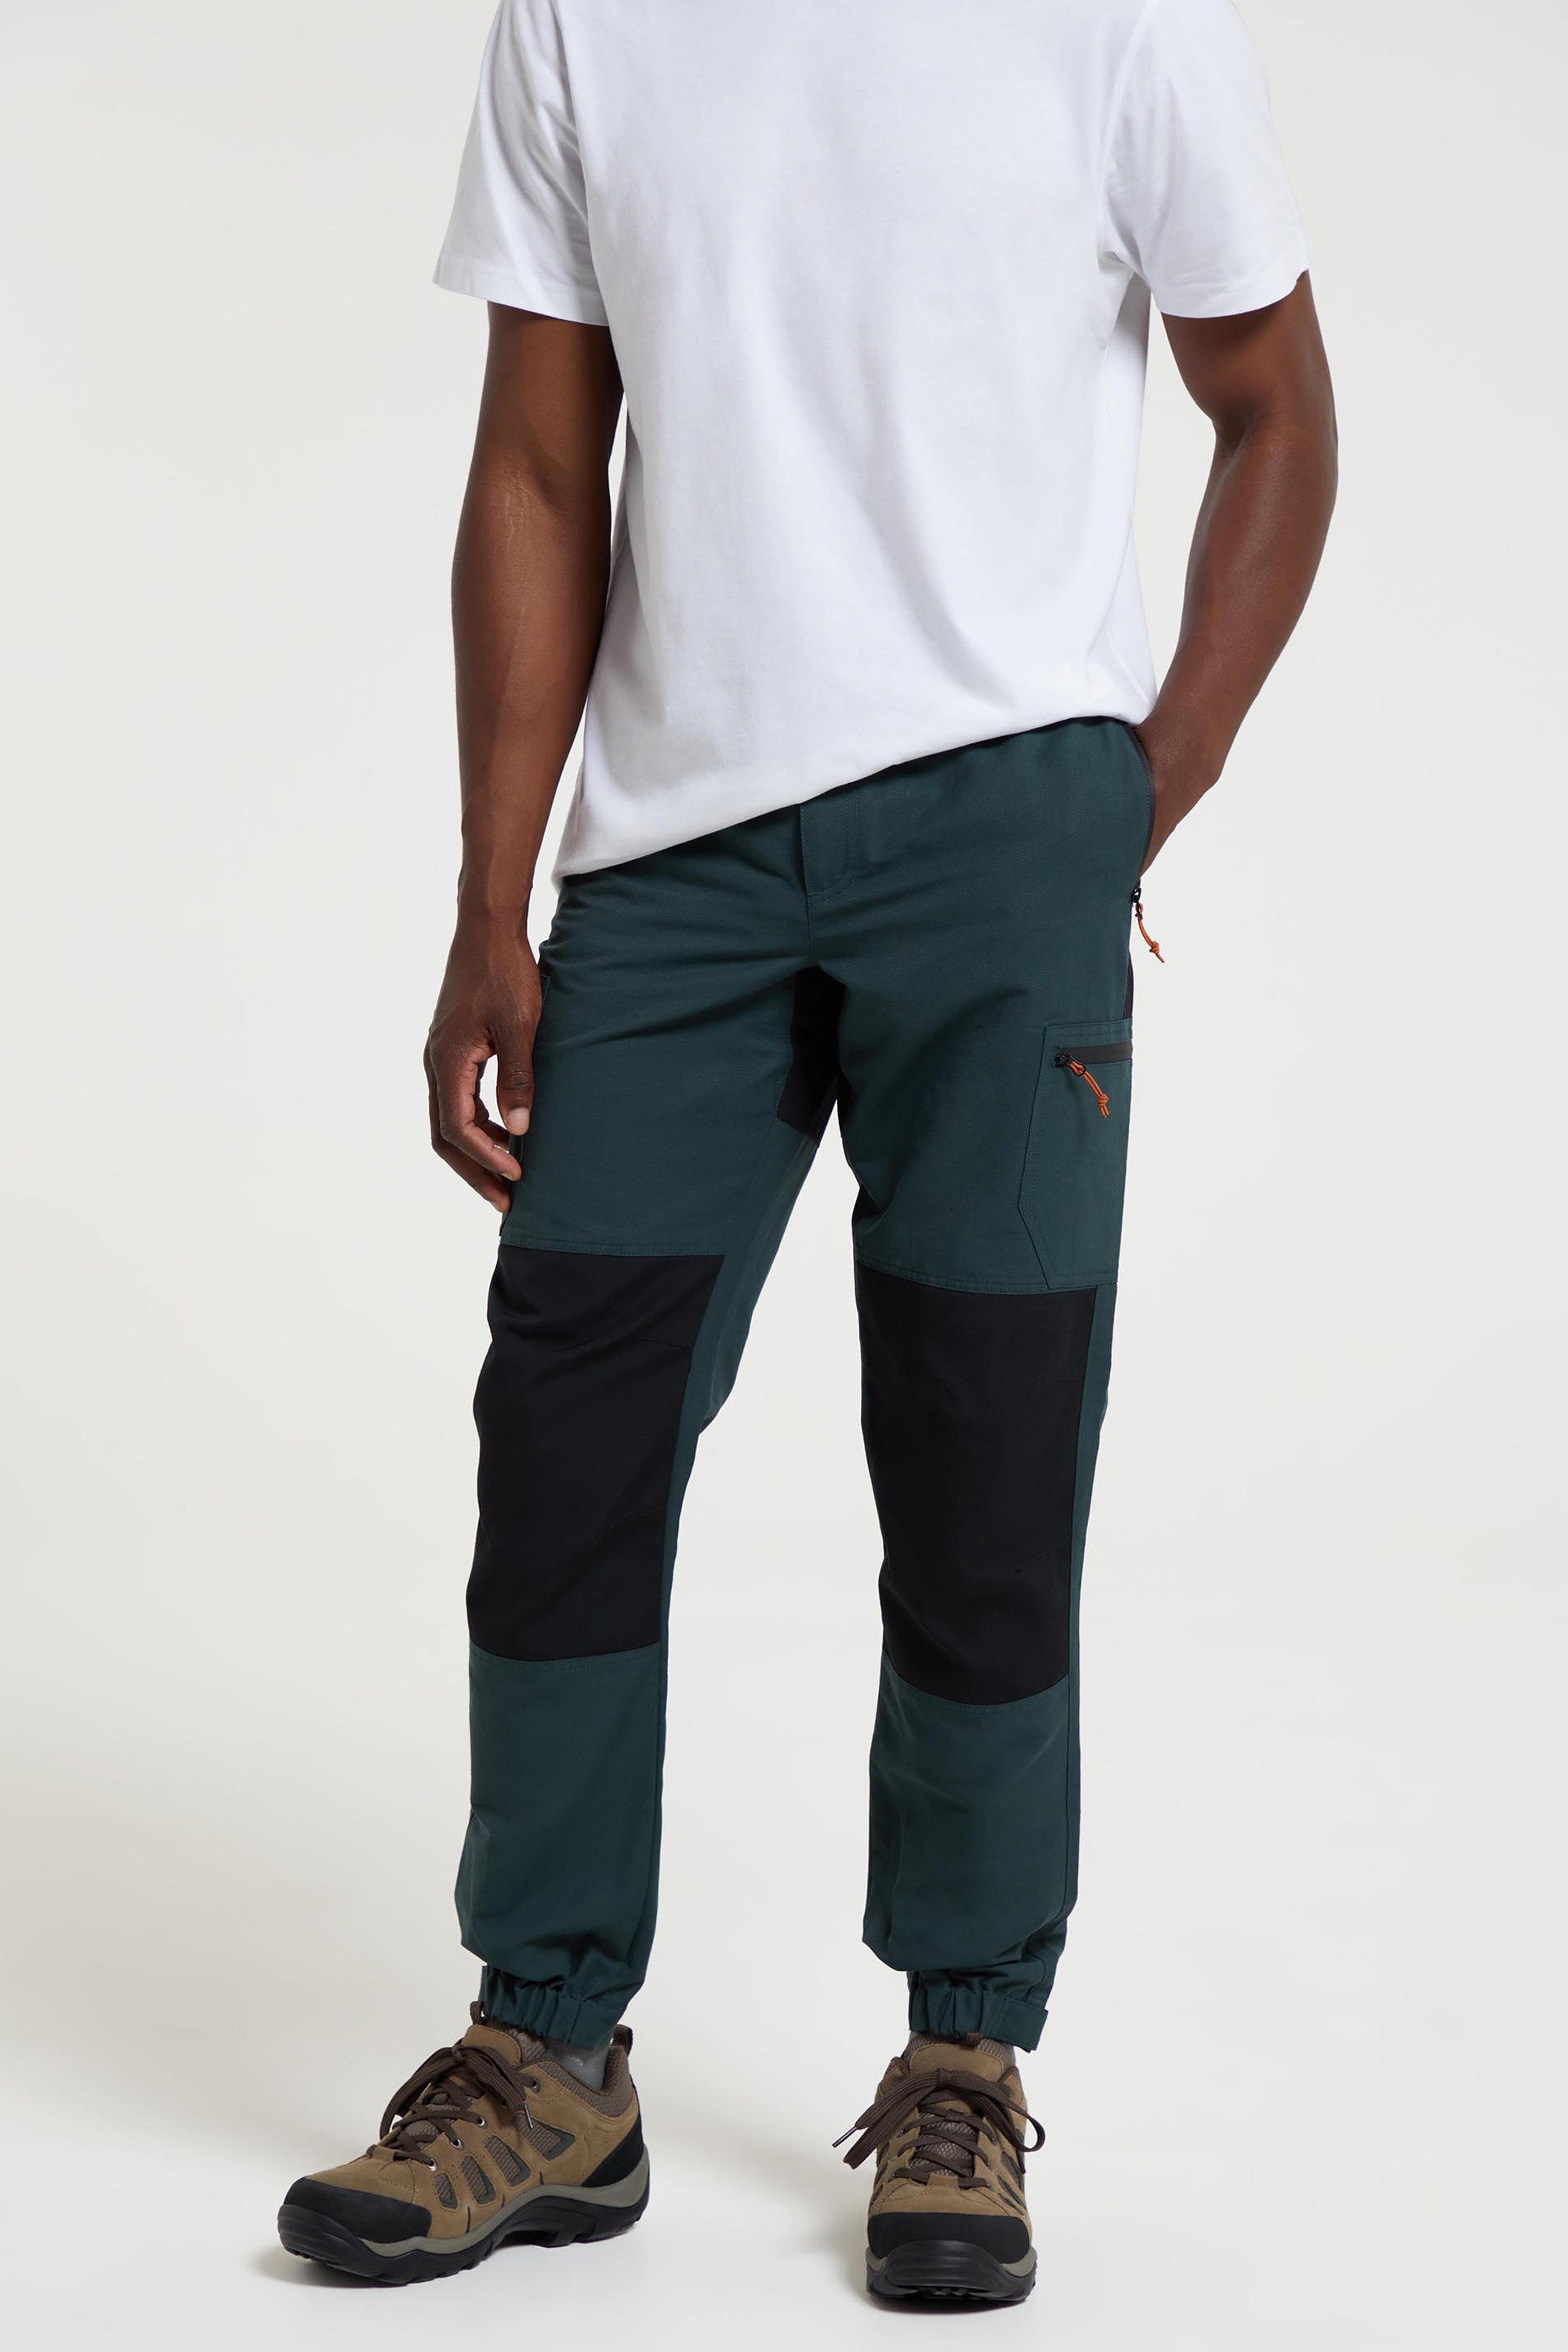 MOUNTAIN WAREHOUSE NAVIGATOR Men's Anti Mosquito Trousers Long Lightweight  Pants £29.99 - PicClick UK